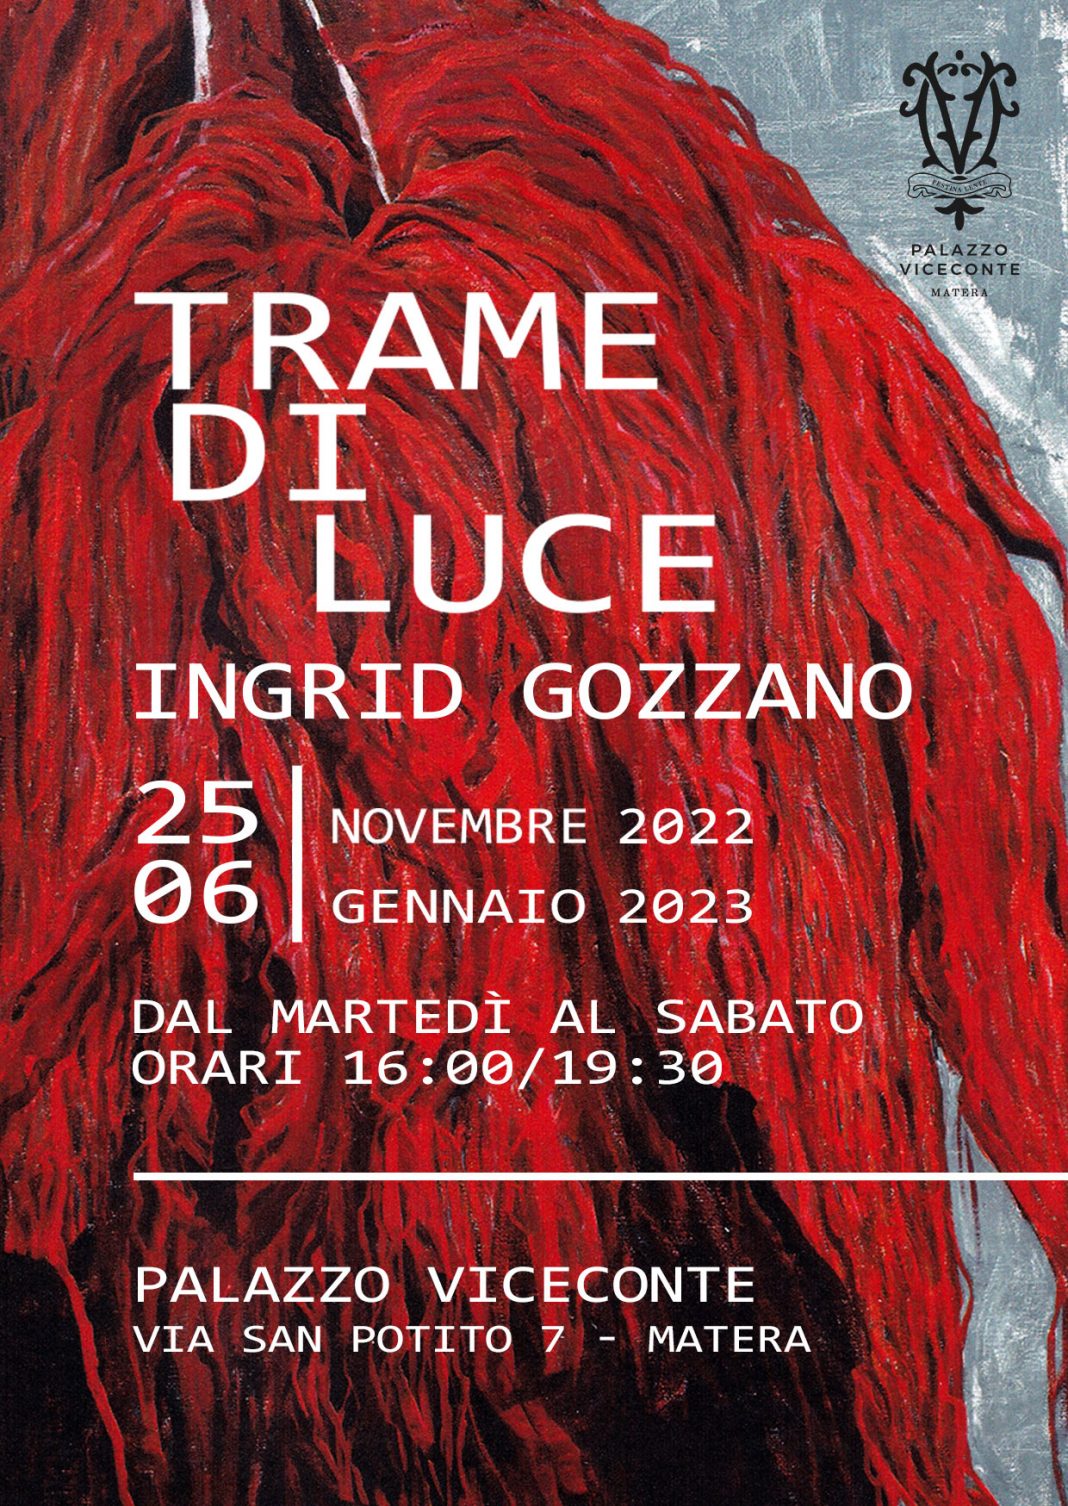 Ingrid Gozzano – Trame di lucehttps://www.exibart.com/repository/media/formidable/11/img/9c8/locandina_trame_di_luce-a-Matera-1068x1506.jpg